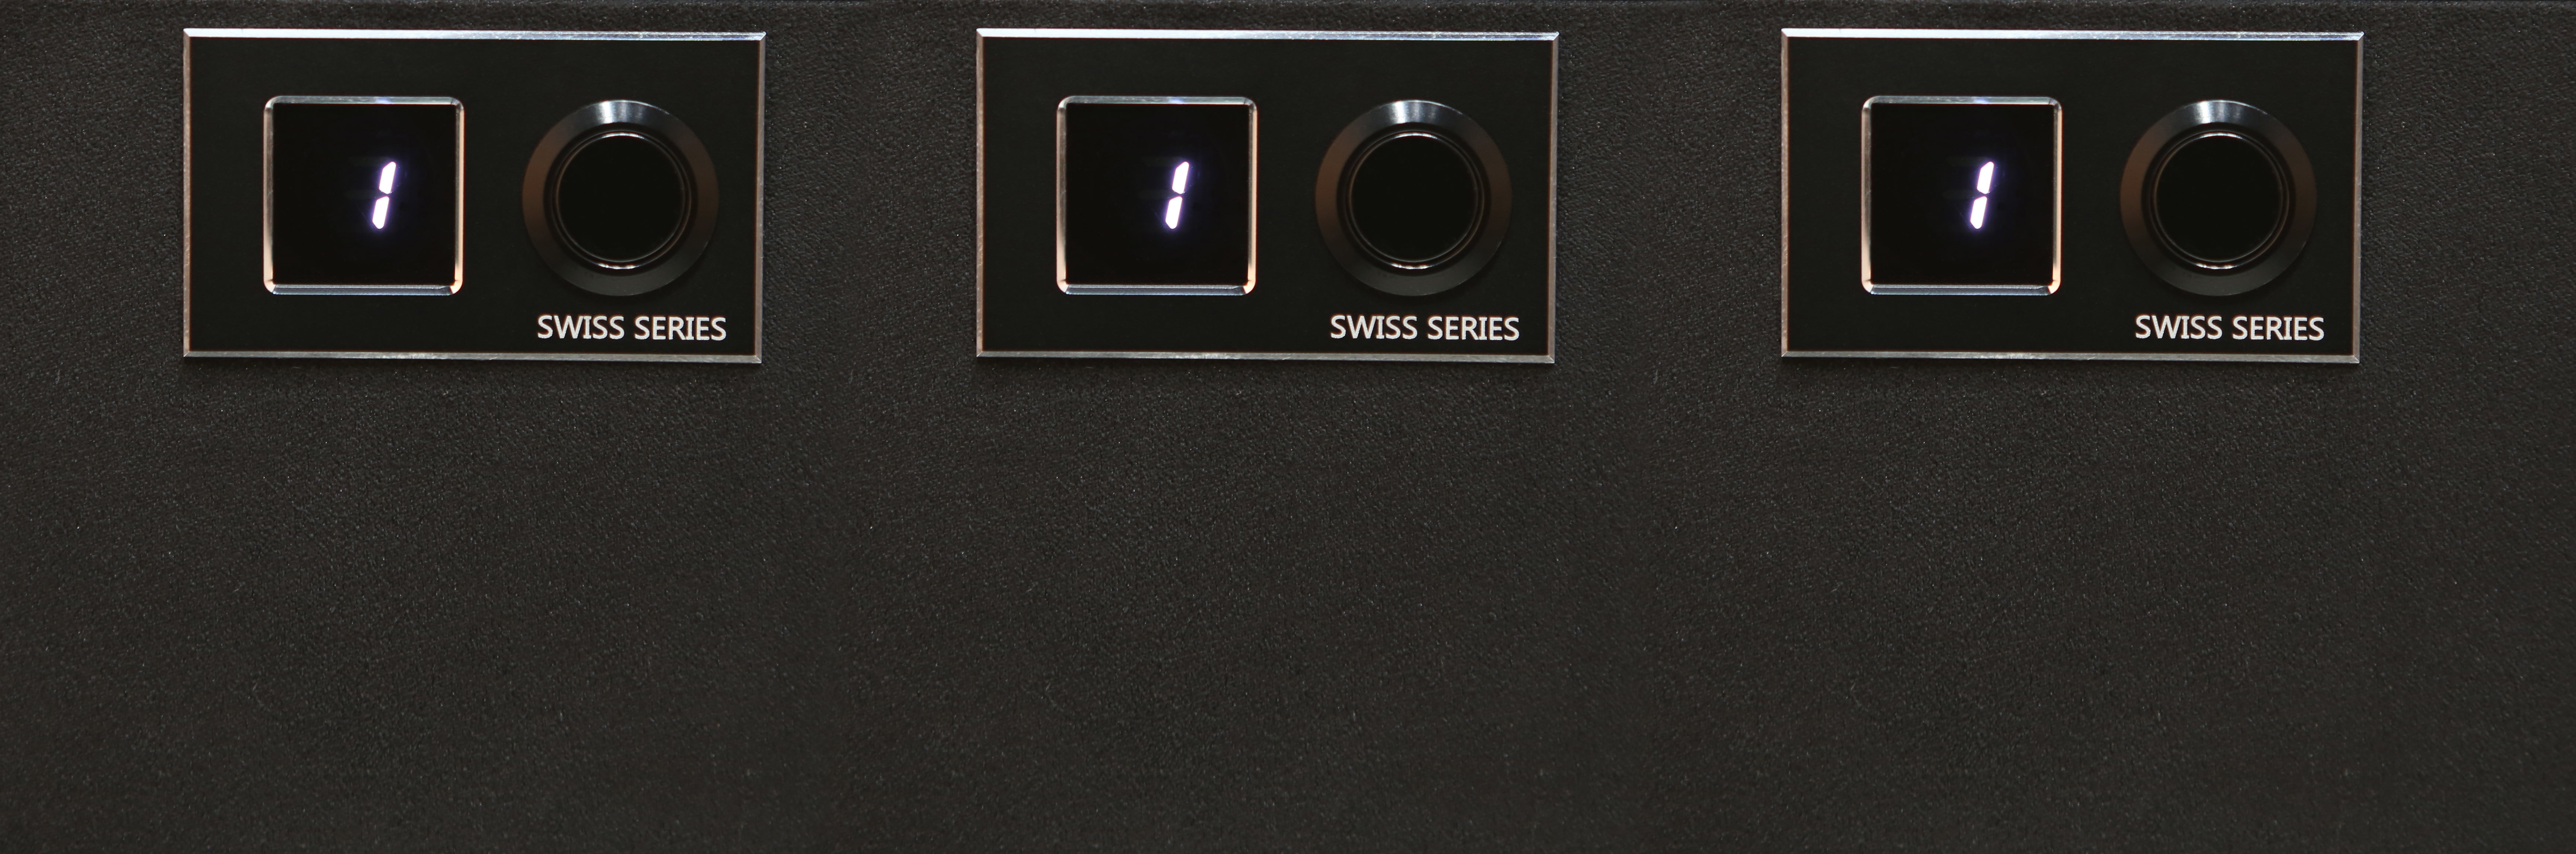 Swiss Series Lea 3.20 B